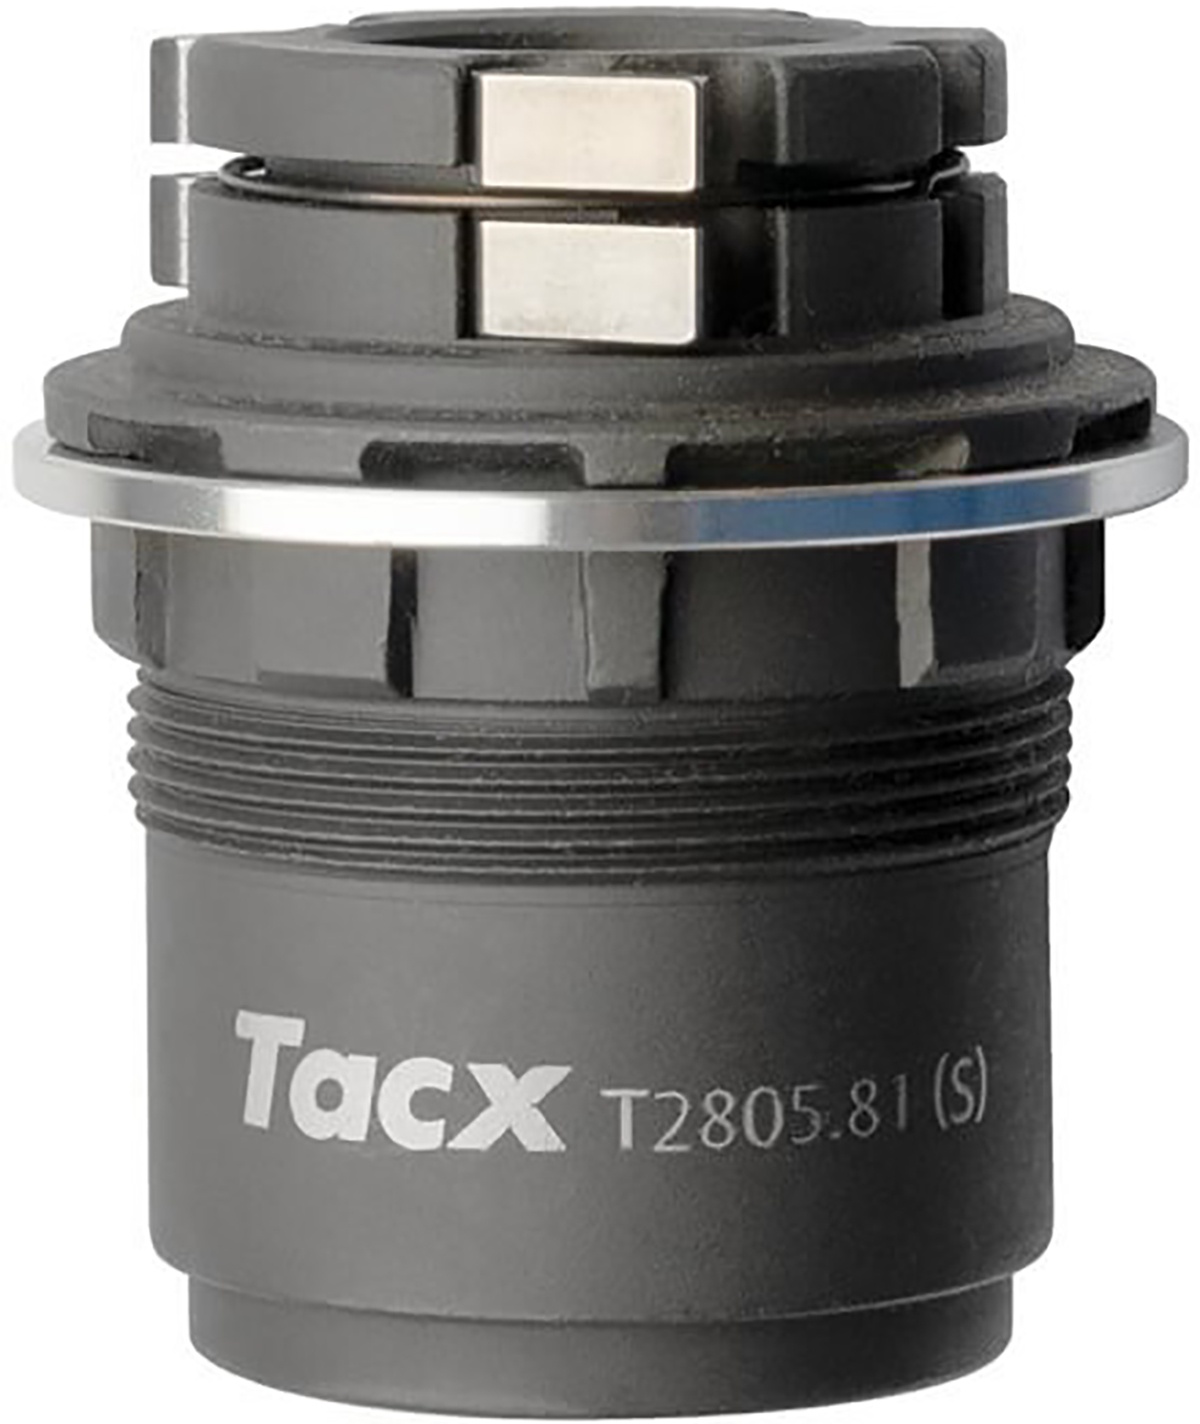 Reservedele - Stikaksler / Quick Release - Garmin Tacx SRAM XD-R Body /  Kassettehylster T2805.81